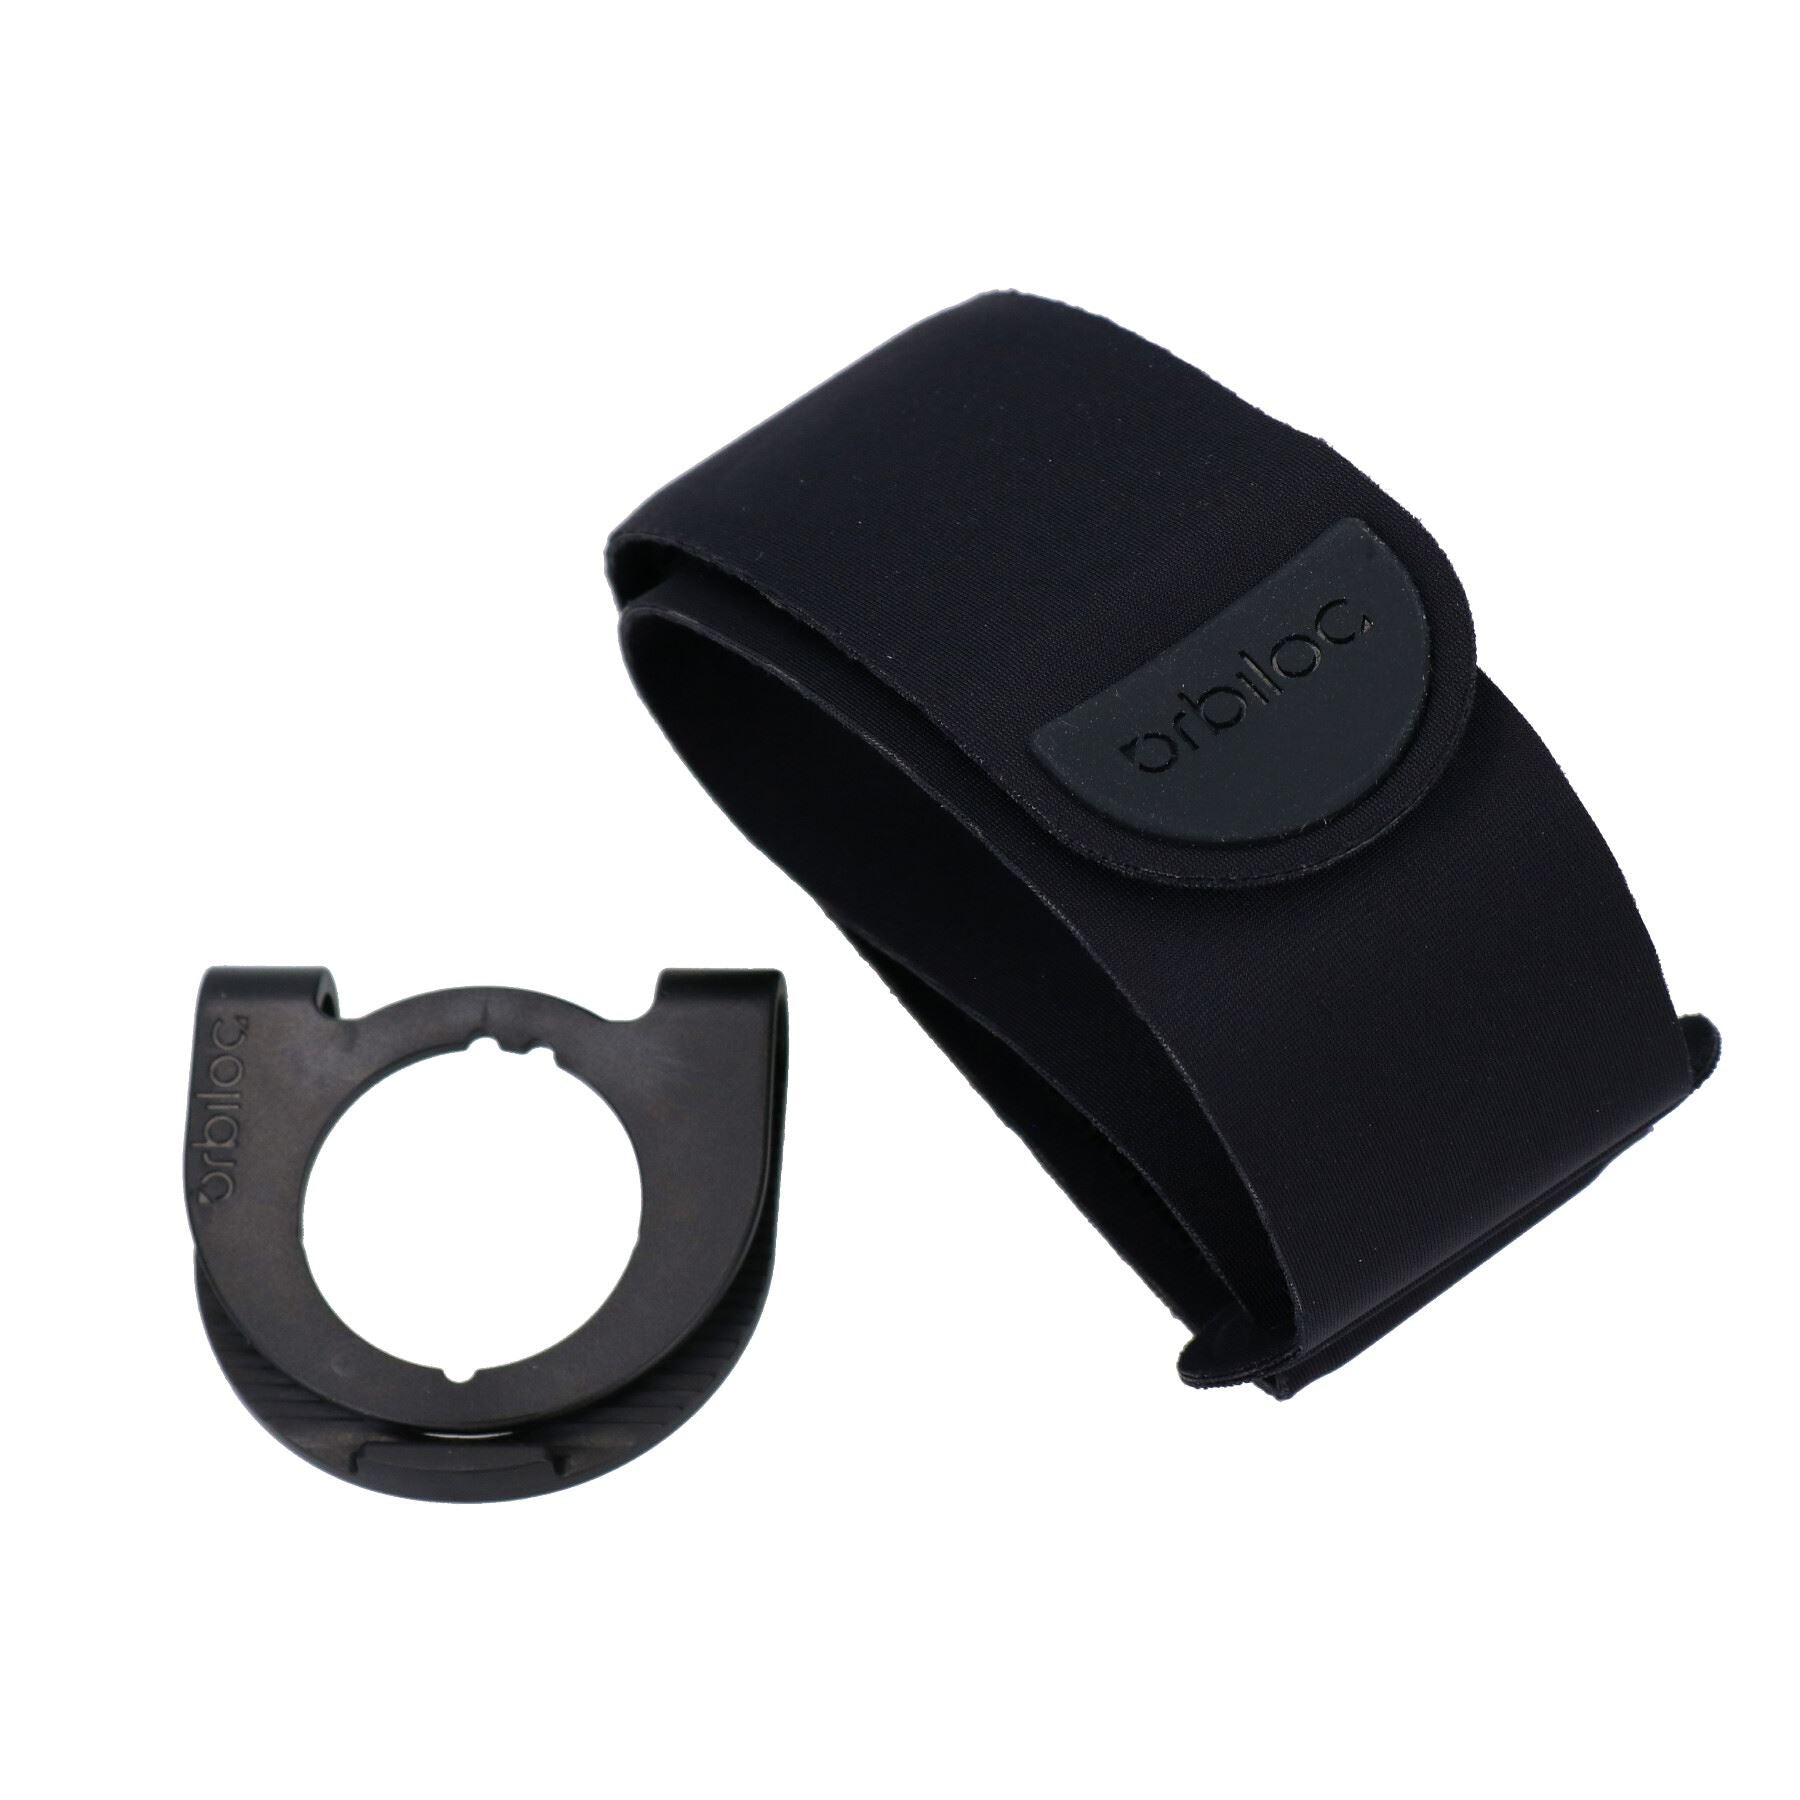 Orbiloc Sports Kit Armband Strap & Clip for Dual Safety Night Light